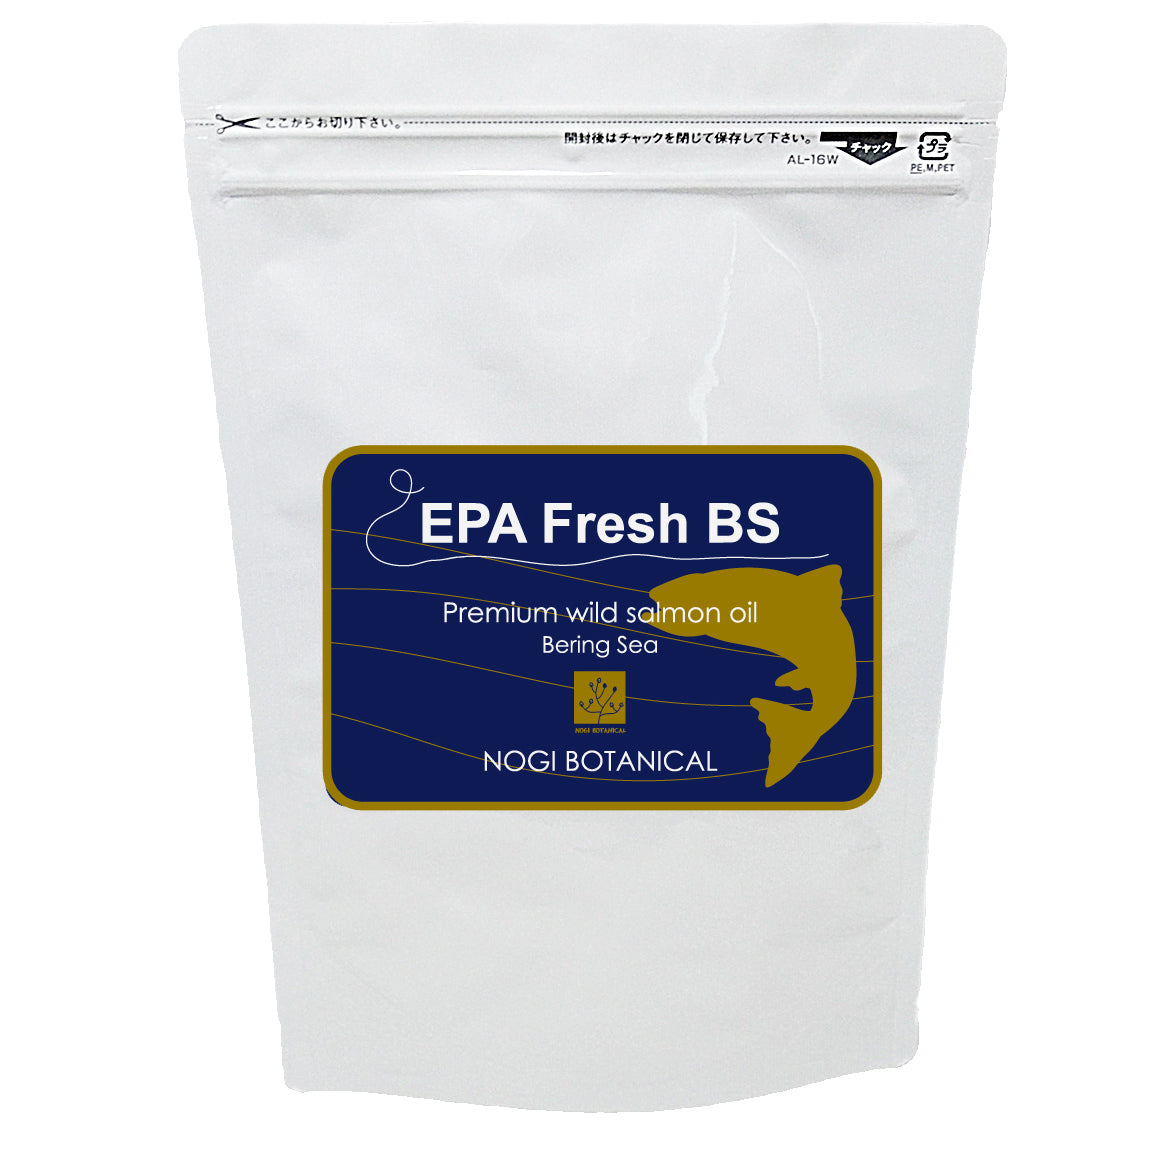 "Epafresh-BS" DHA + EPA (L) 120 tablets refill 